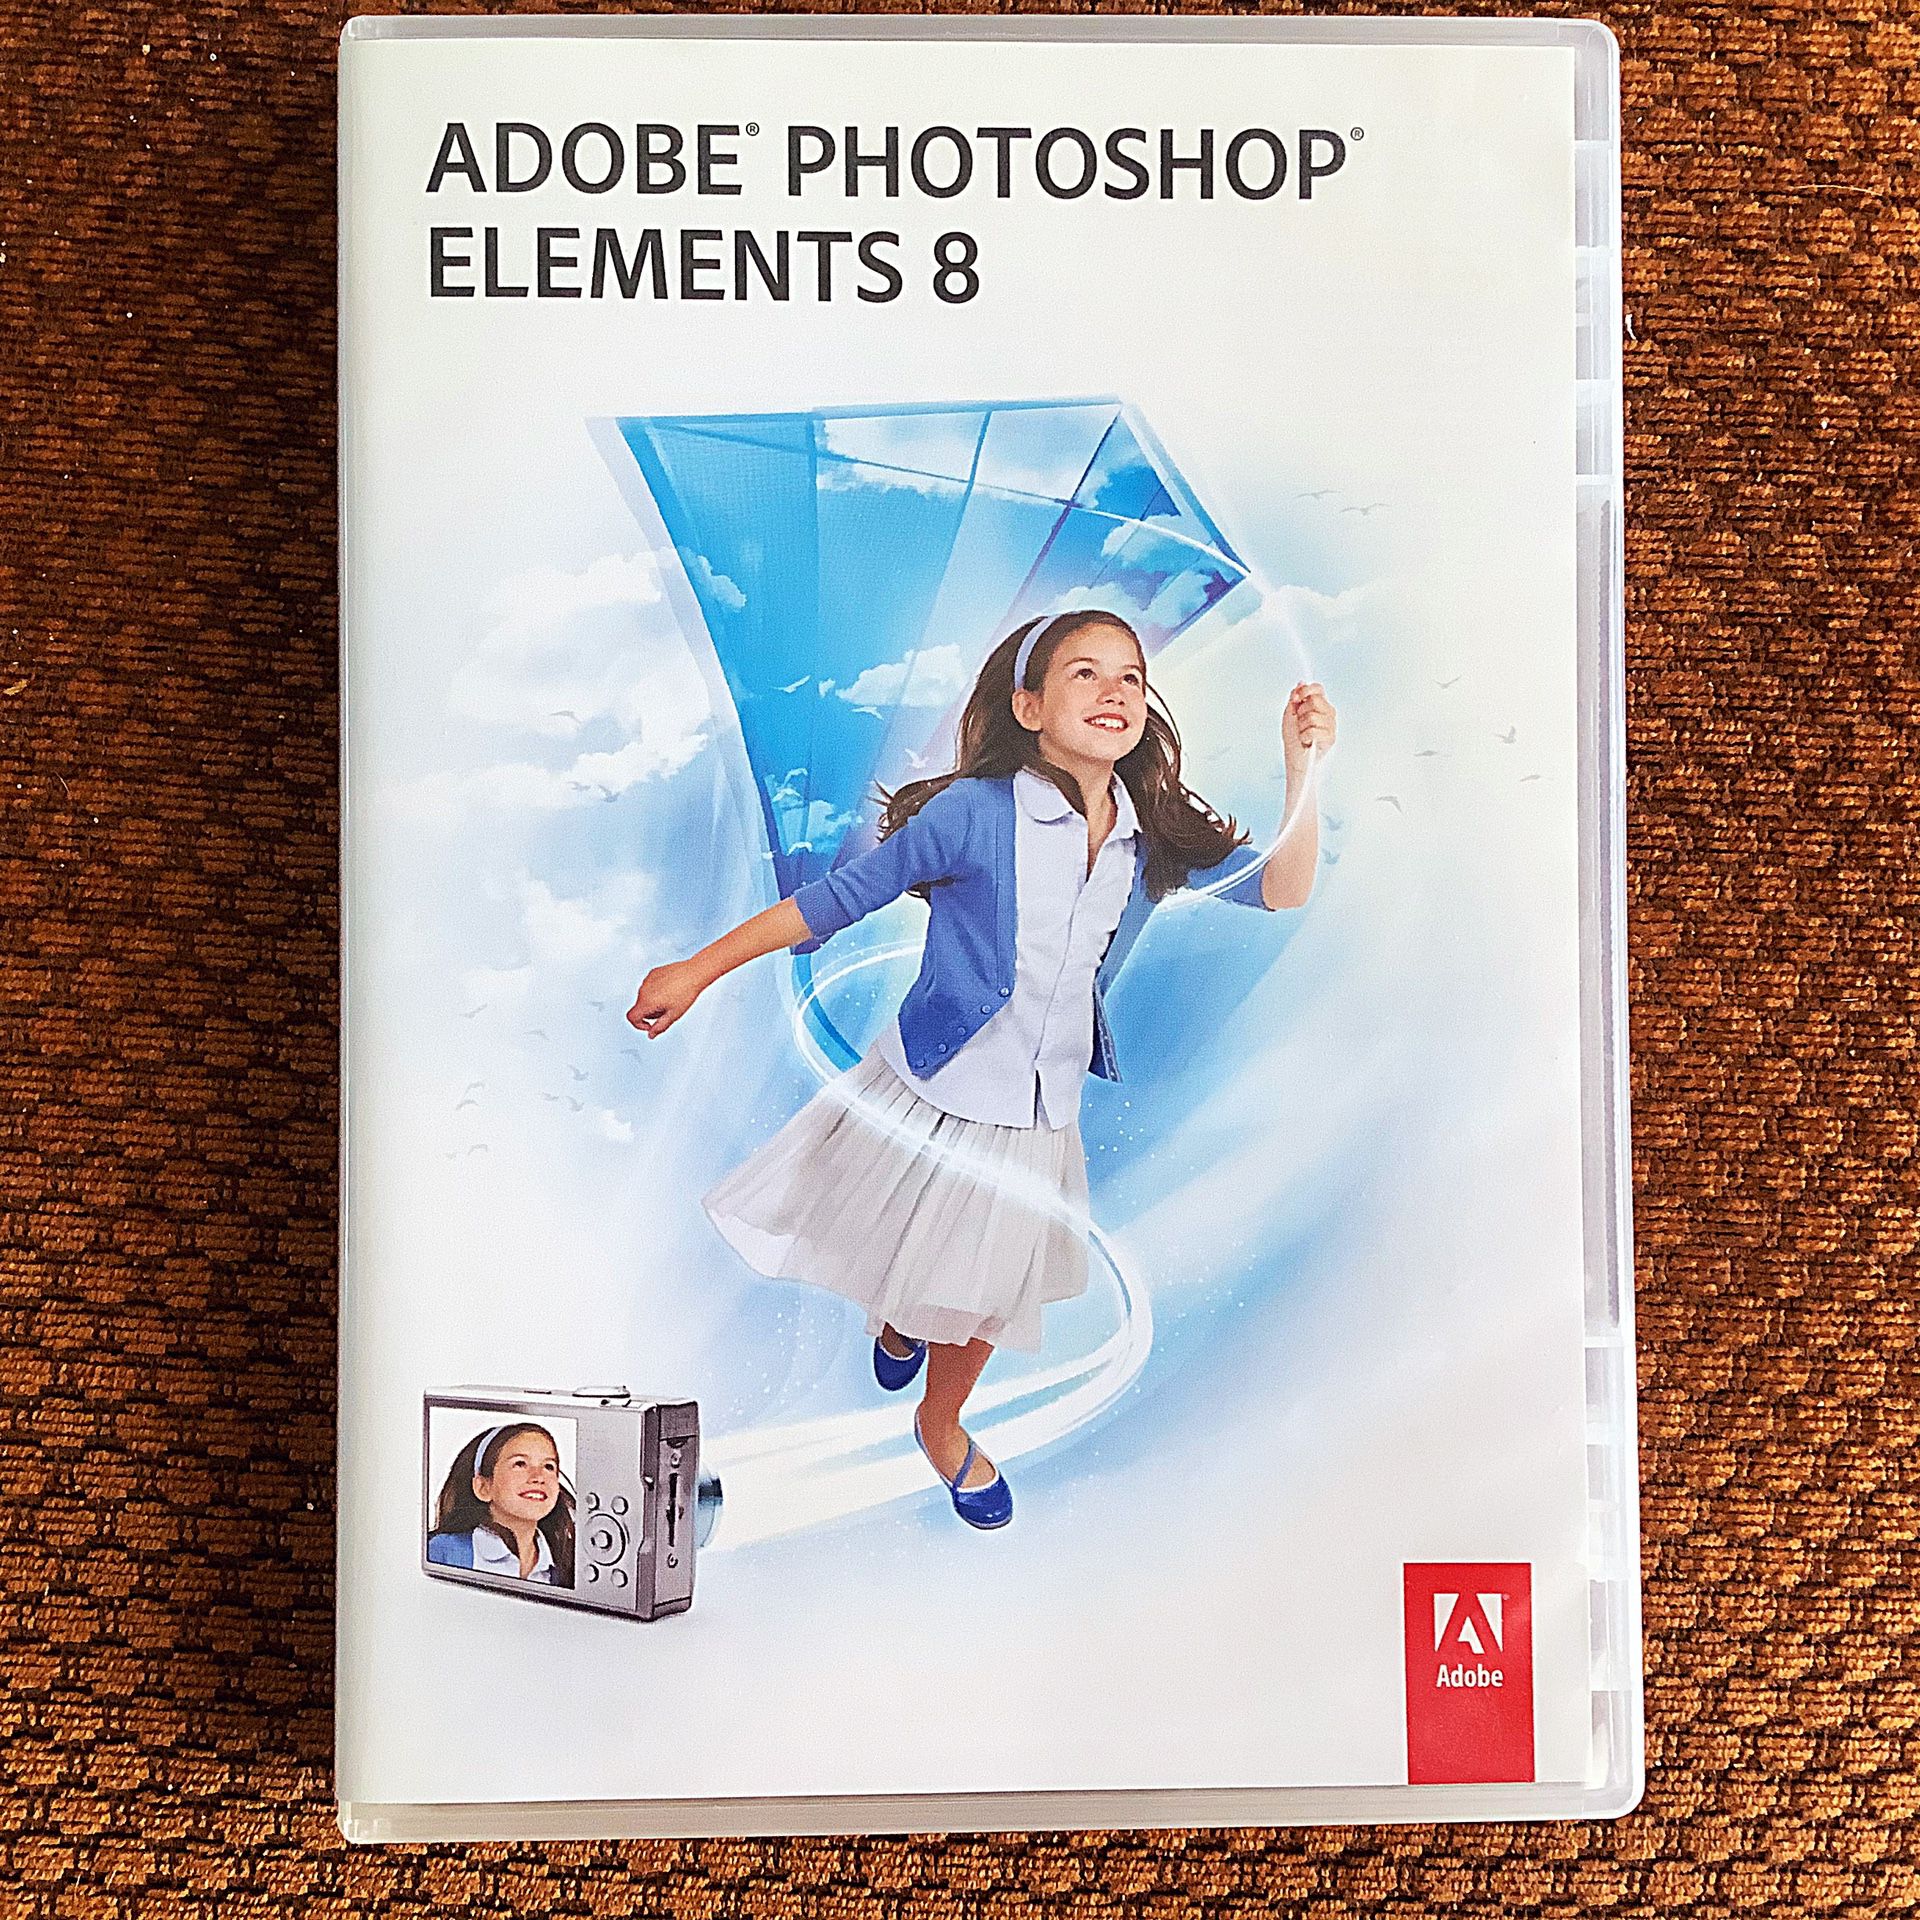 Adobe photoshop elements 8 for windows